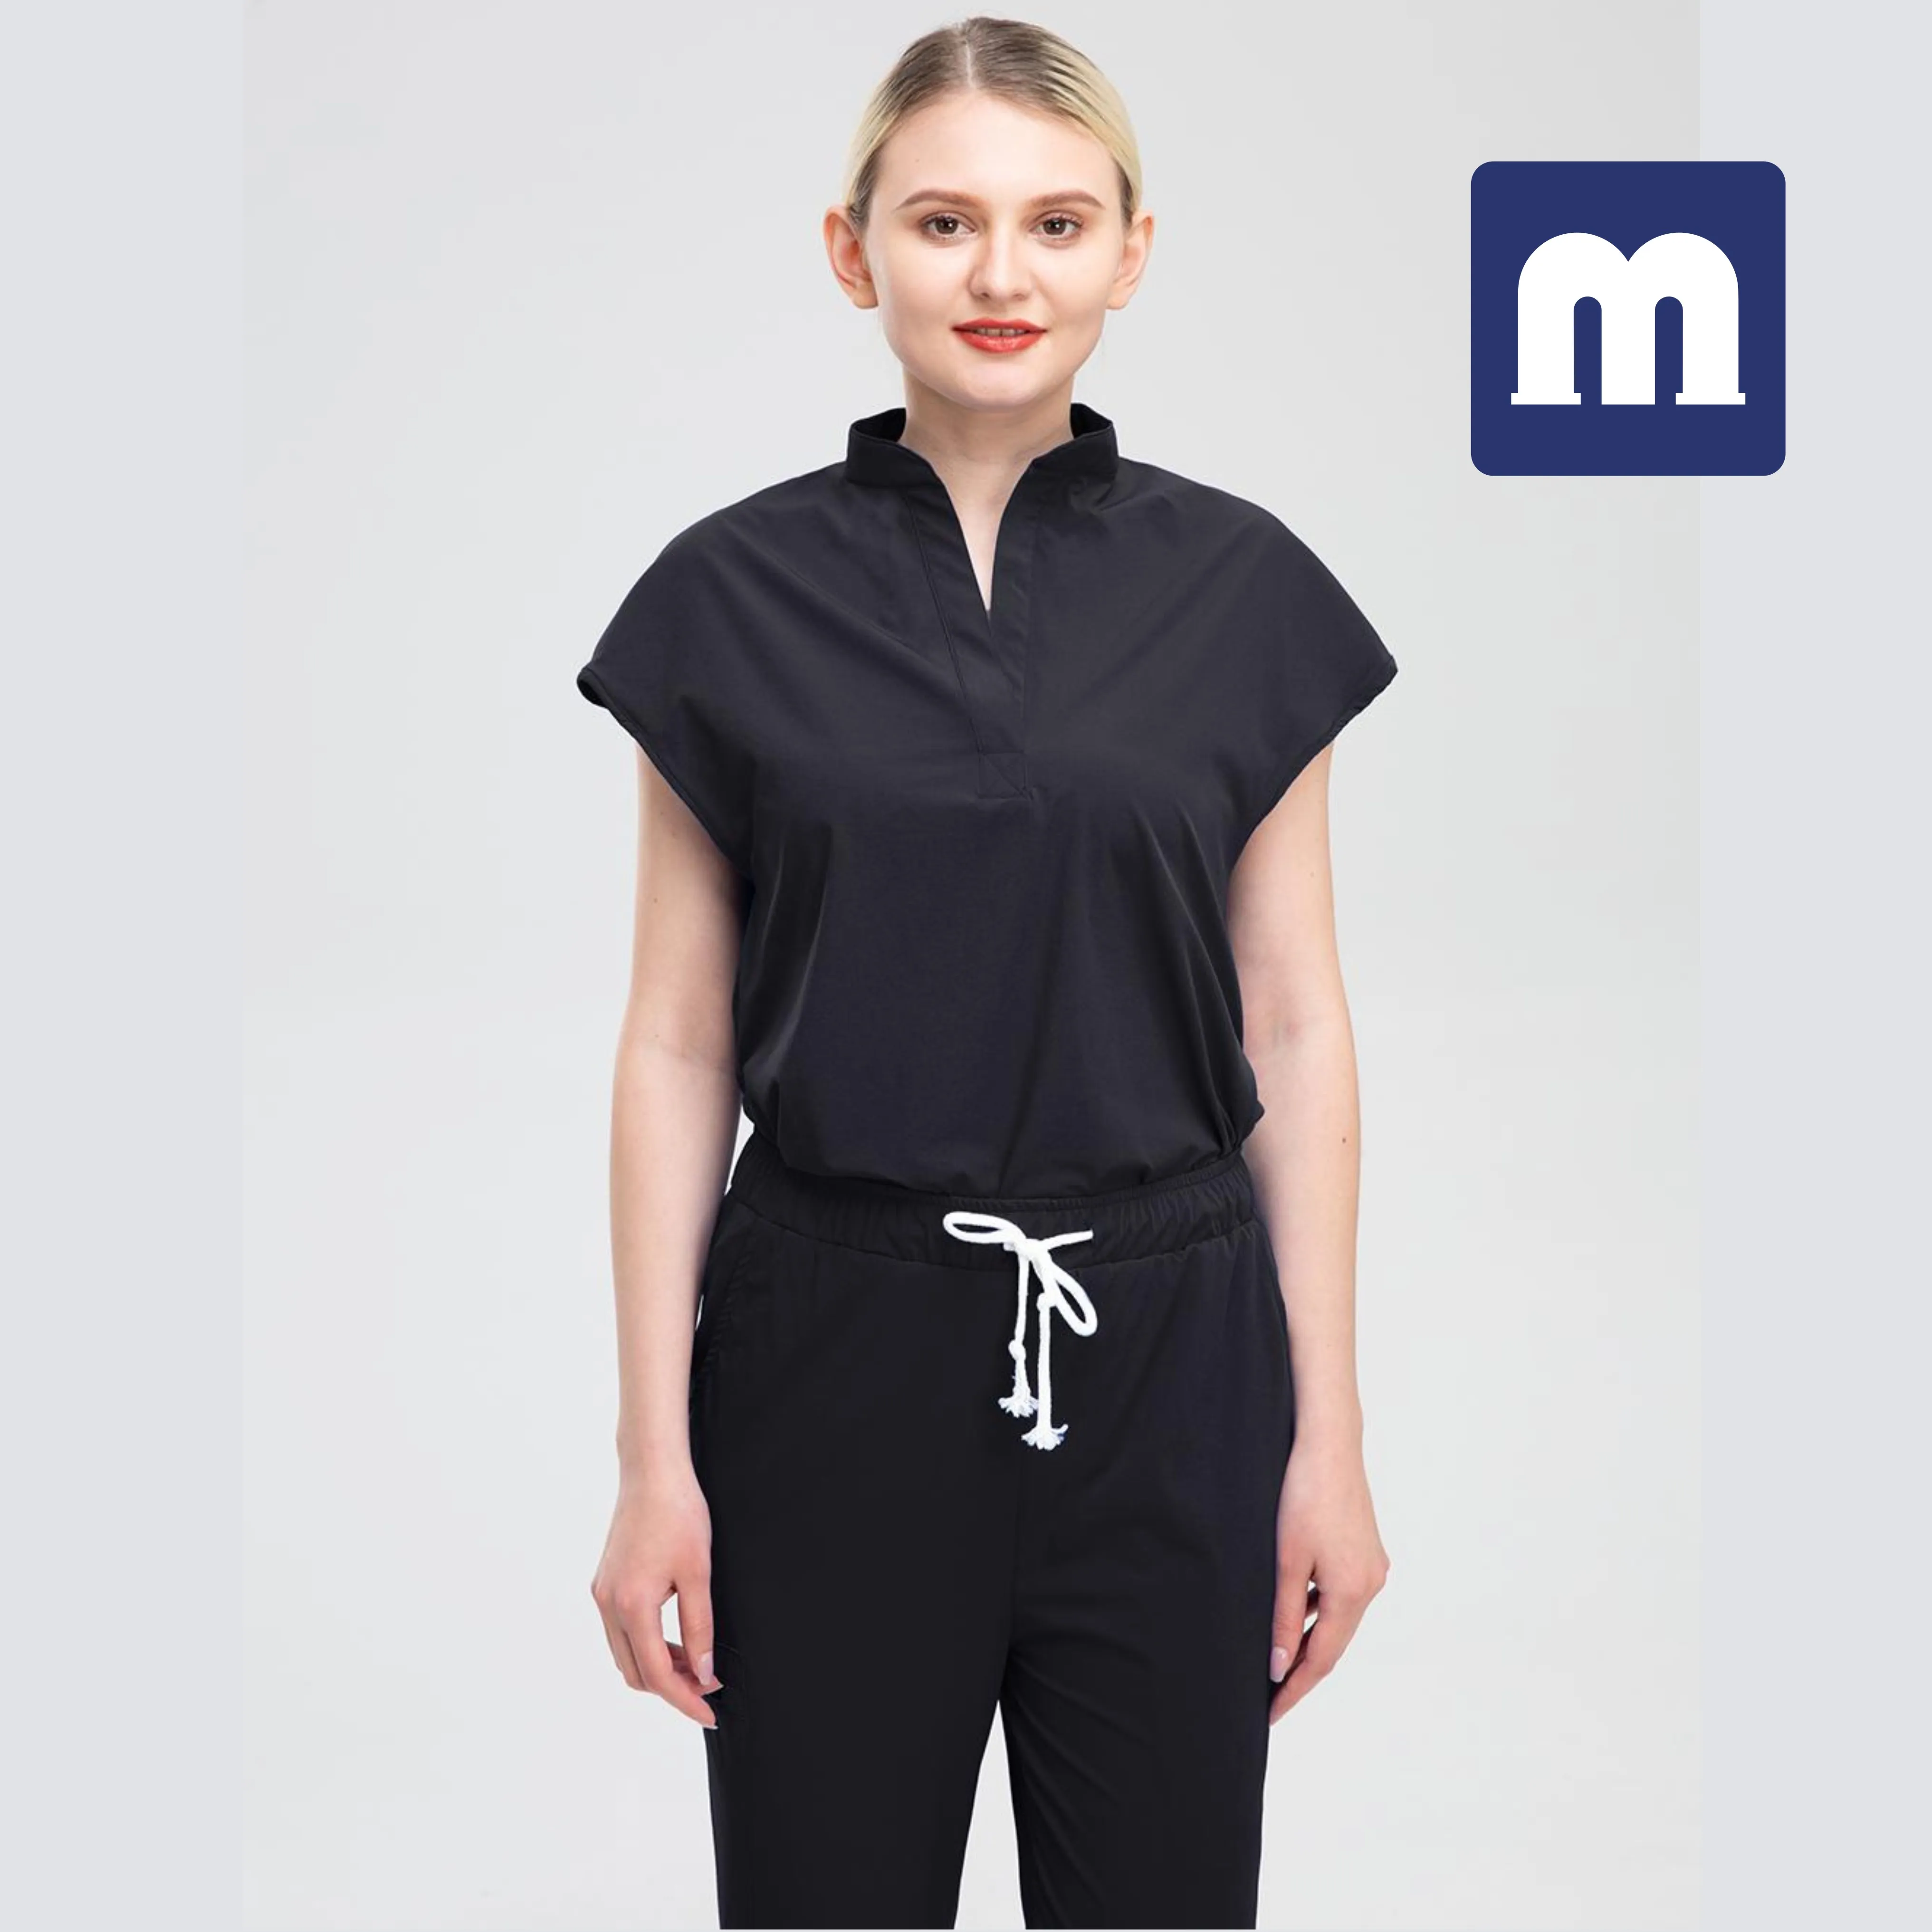 Medigo 002 Women's Two Piece Pants Solid Color Spa Threaded Clinic Work Suits Tops+pants Unisex Scrubs Pet Nursing hospital Uniform